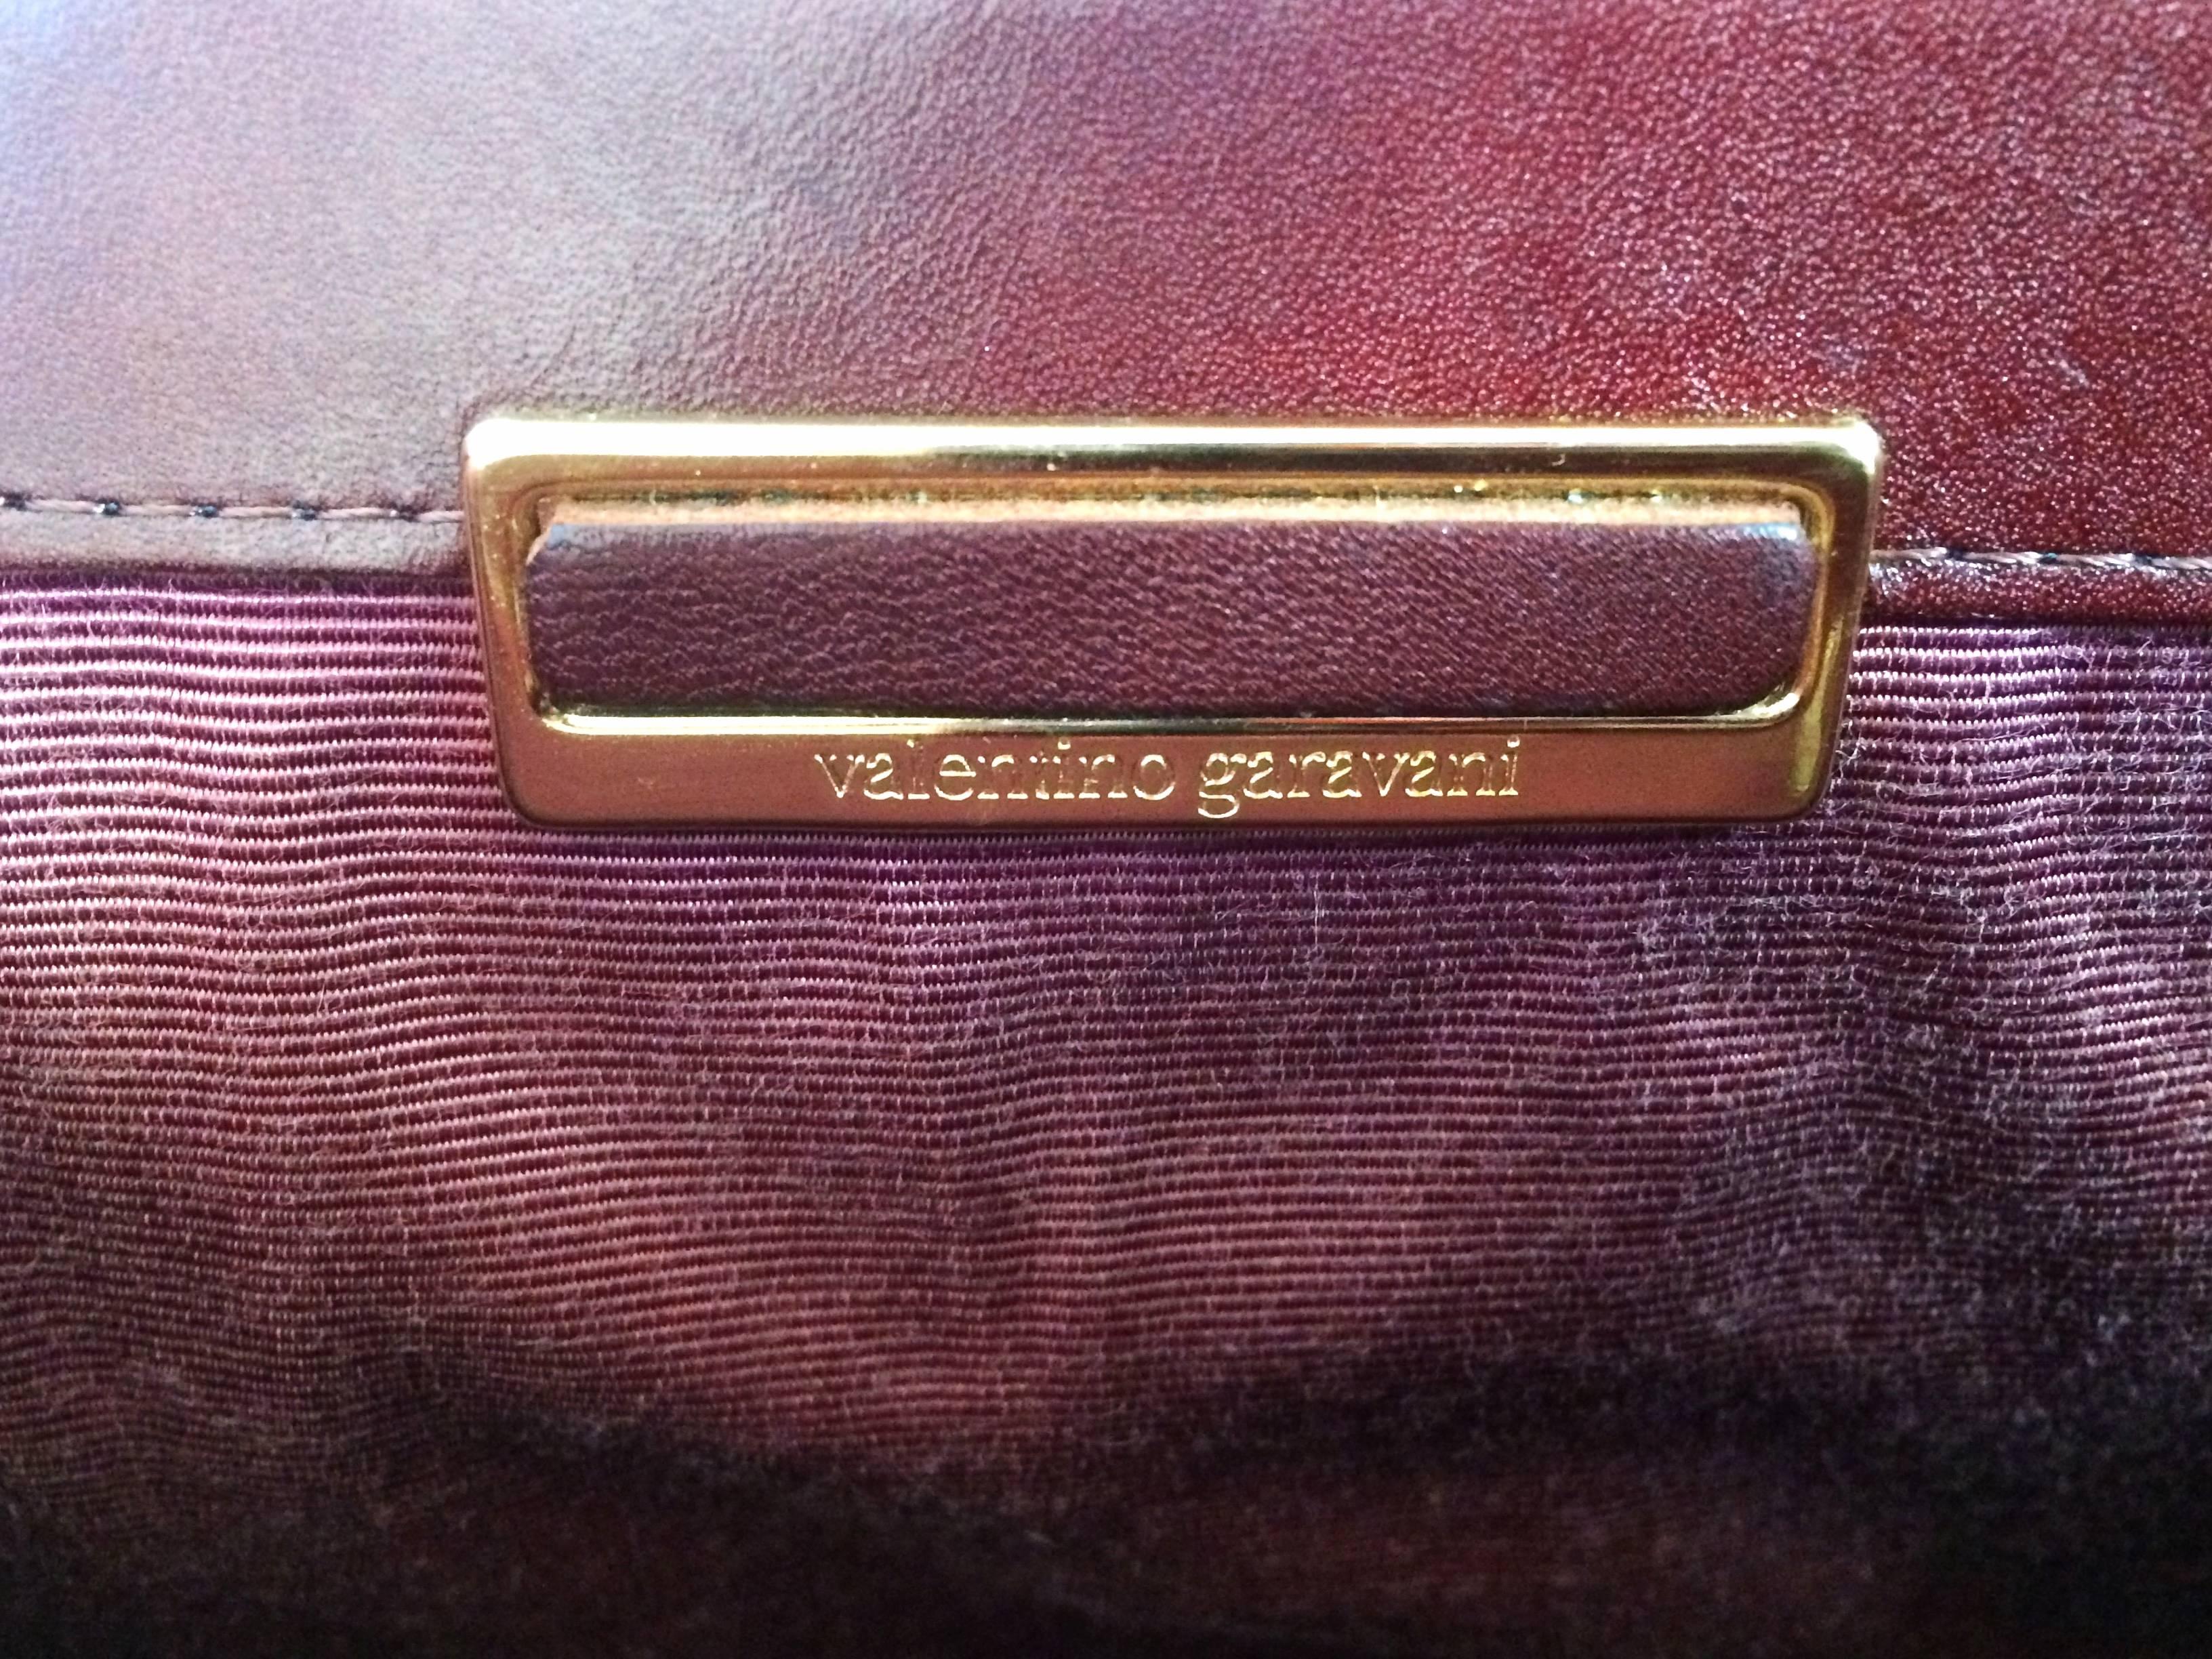 Vintage Valentino Garavani wine epi and smooth leather handbag with buckle flap. 1